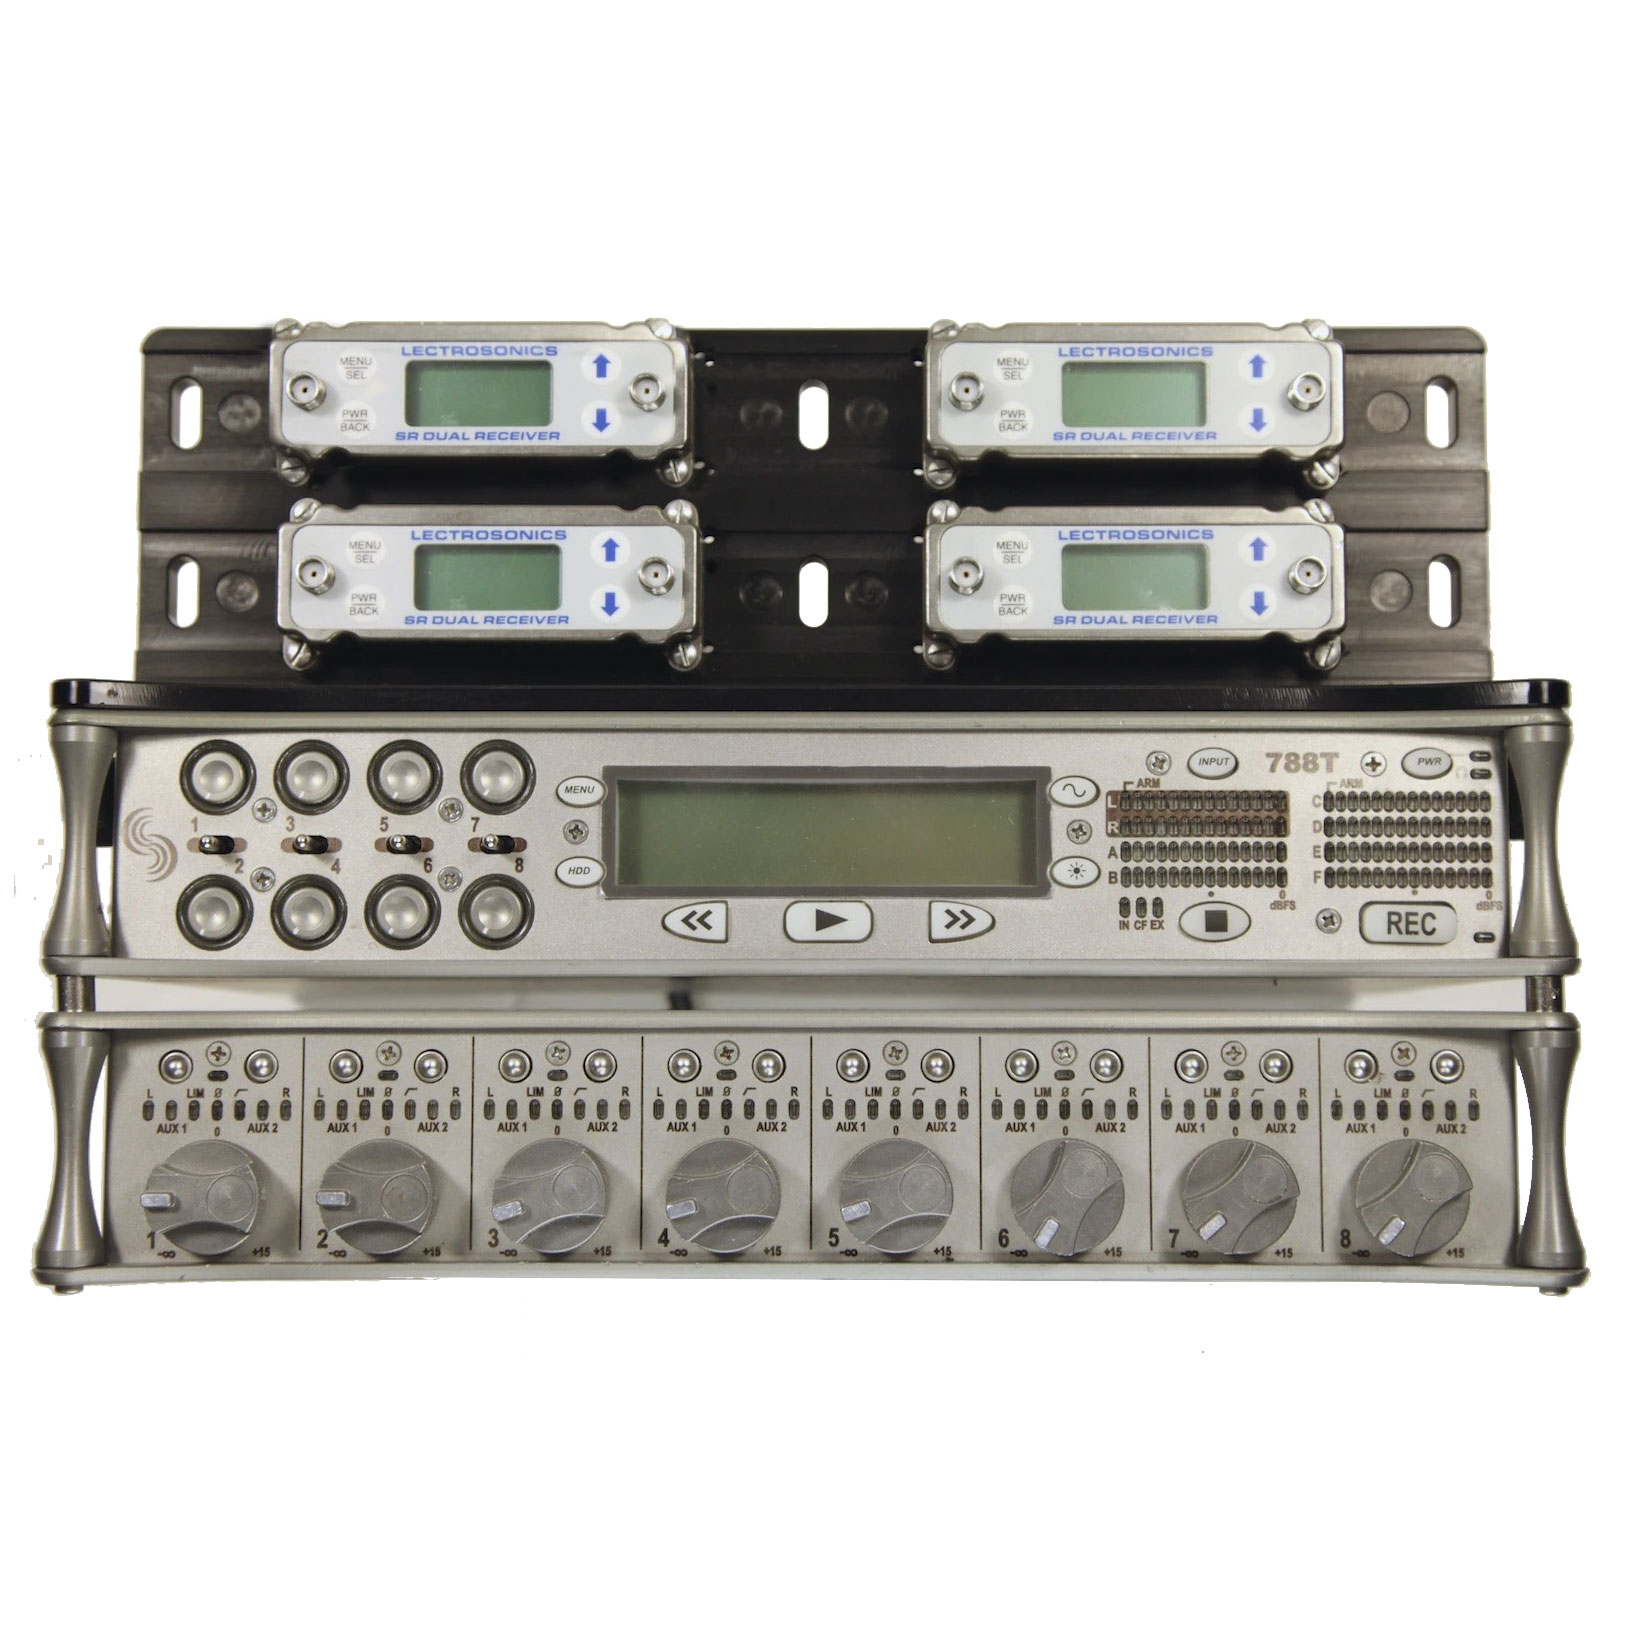 SOUND DEVICES サウンドデバイス 788T CL-8 CL-9 オーディオレコーダー ...